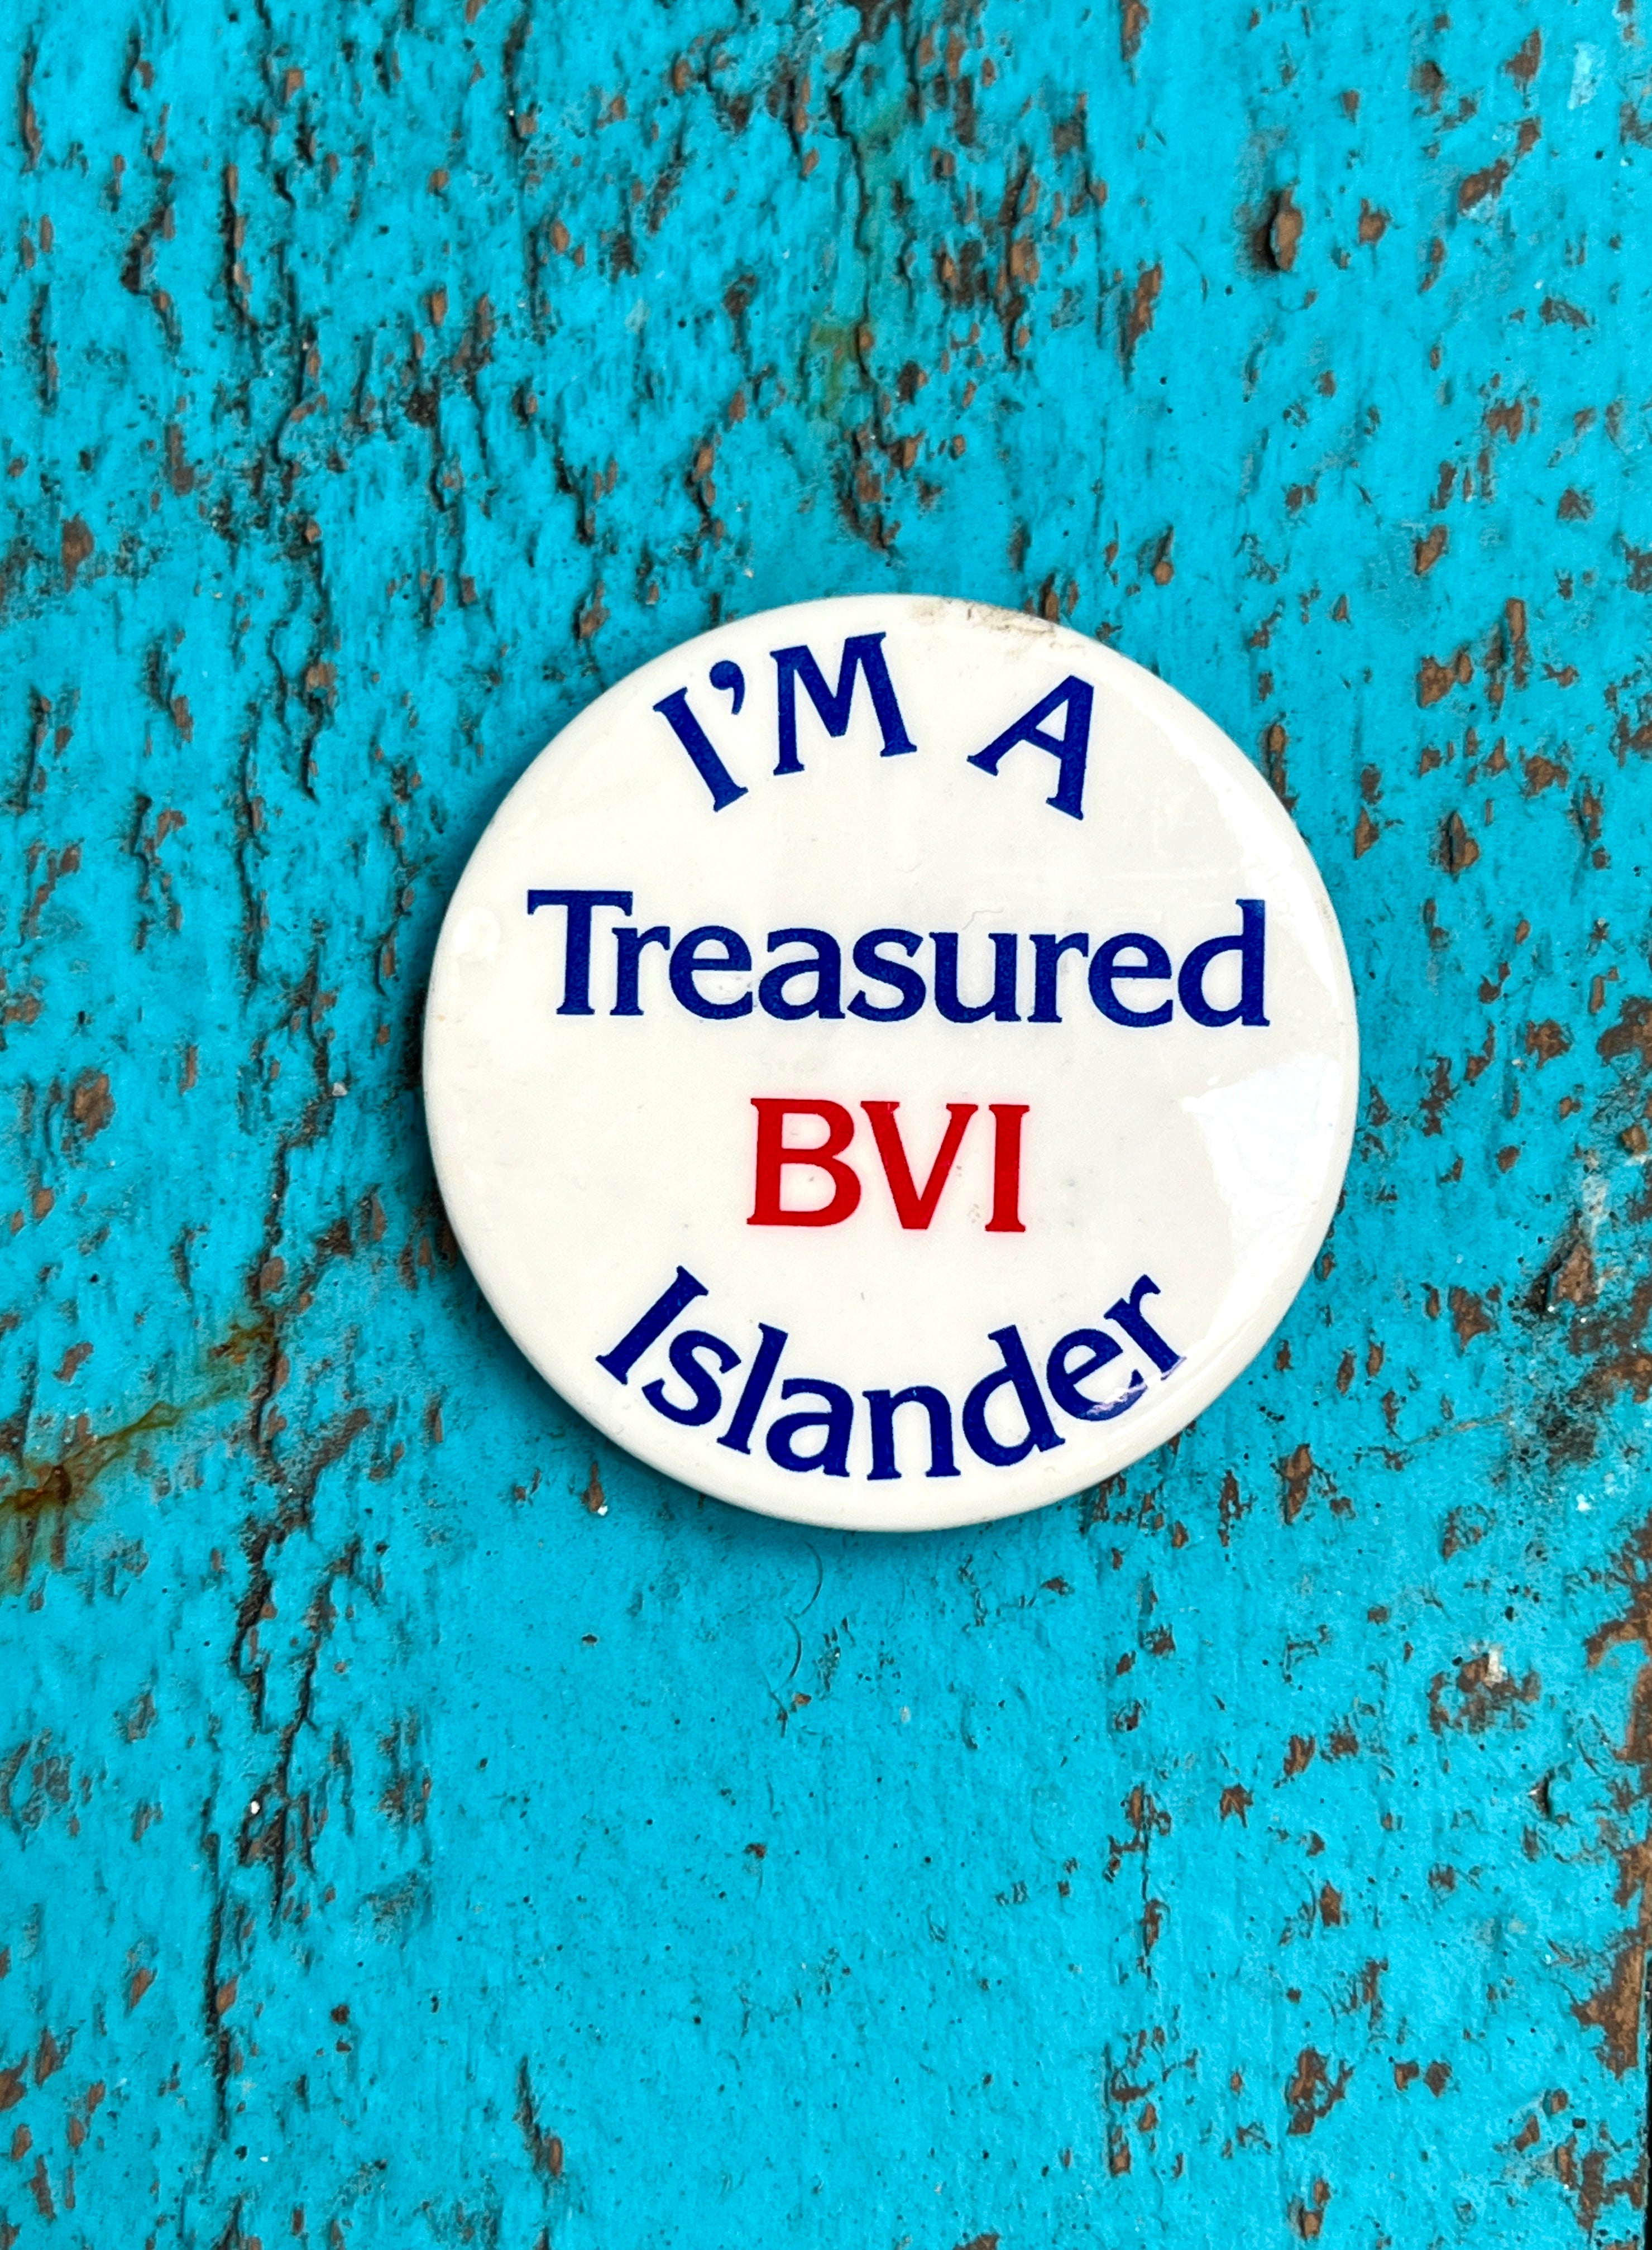 "I'm a Treasured BVI Islander" Pinback Button; British Virgin Islands